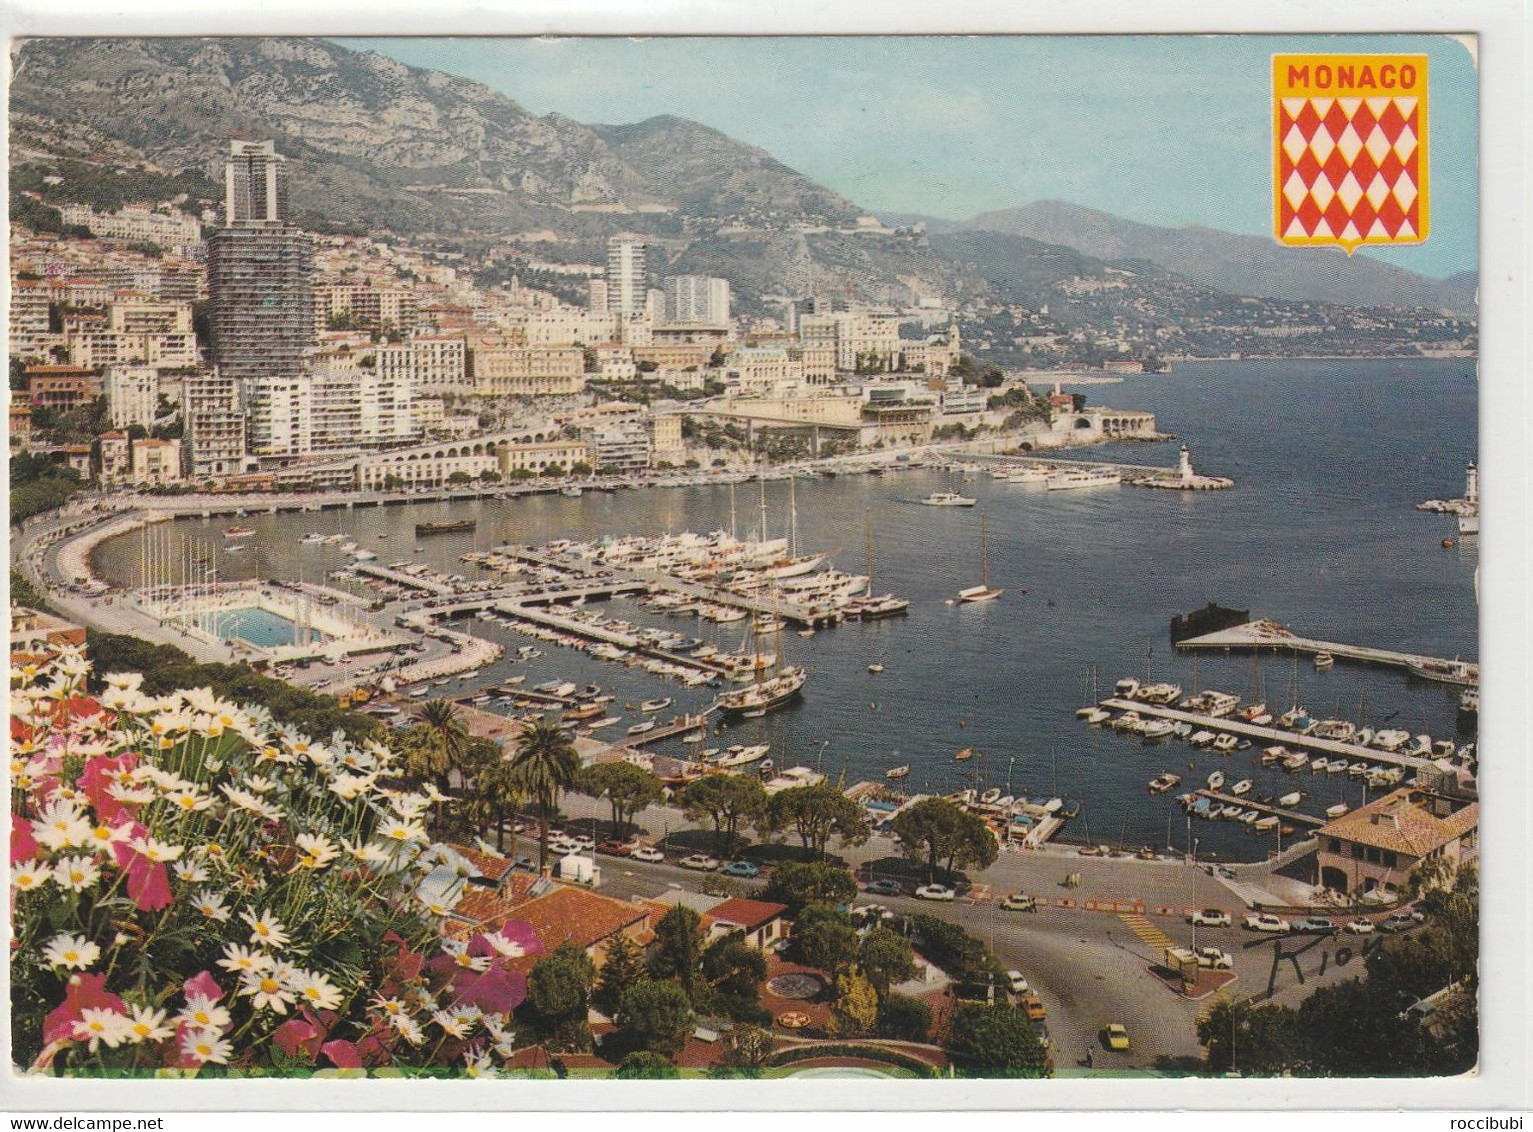 Monaco, Monaco - Panoramic Views